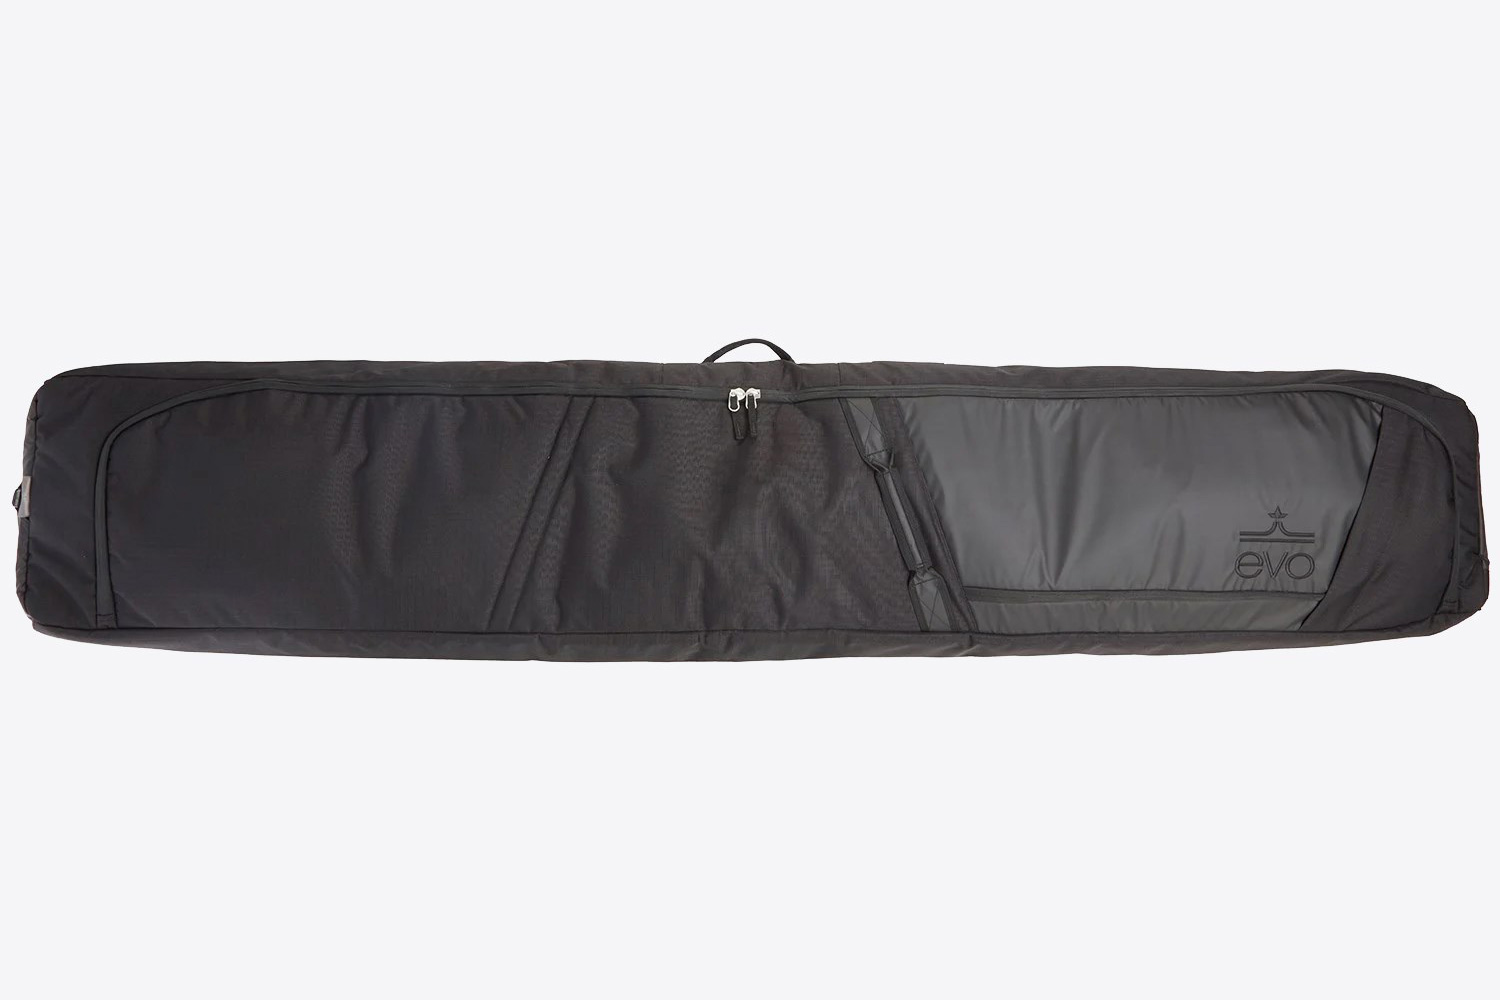 AUMTISC Snowboard Bags Ski Bag Padded for Ski Travel Bag with Storage 165cm BB#9 